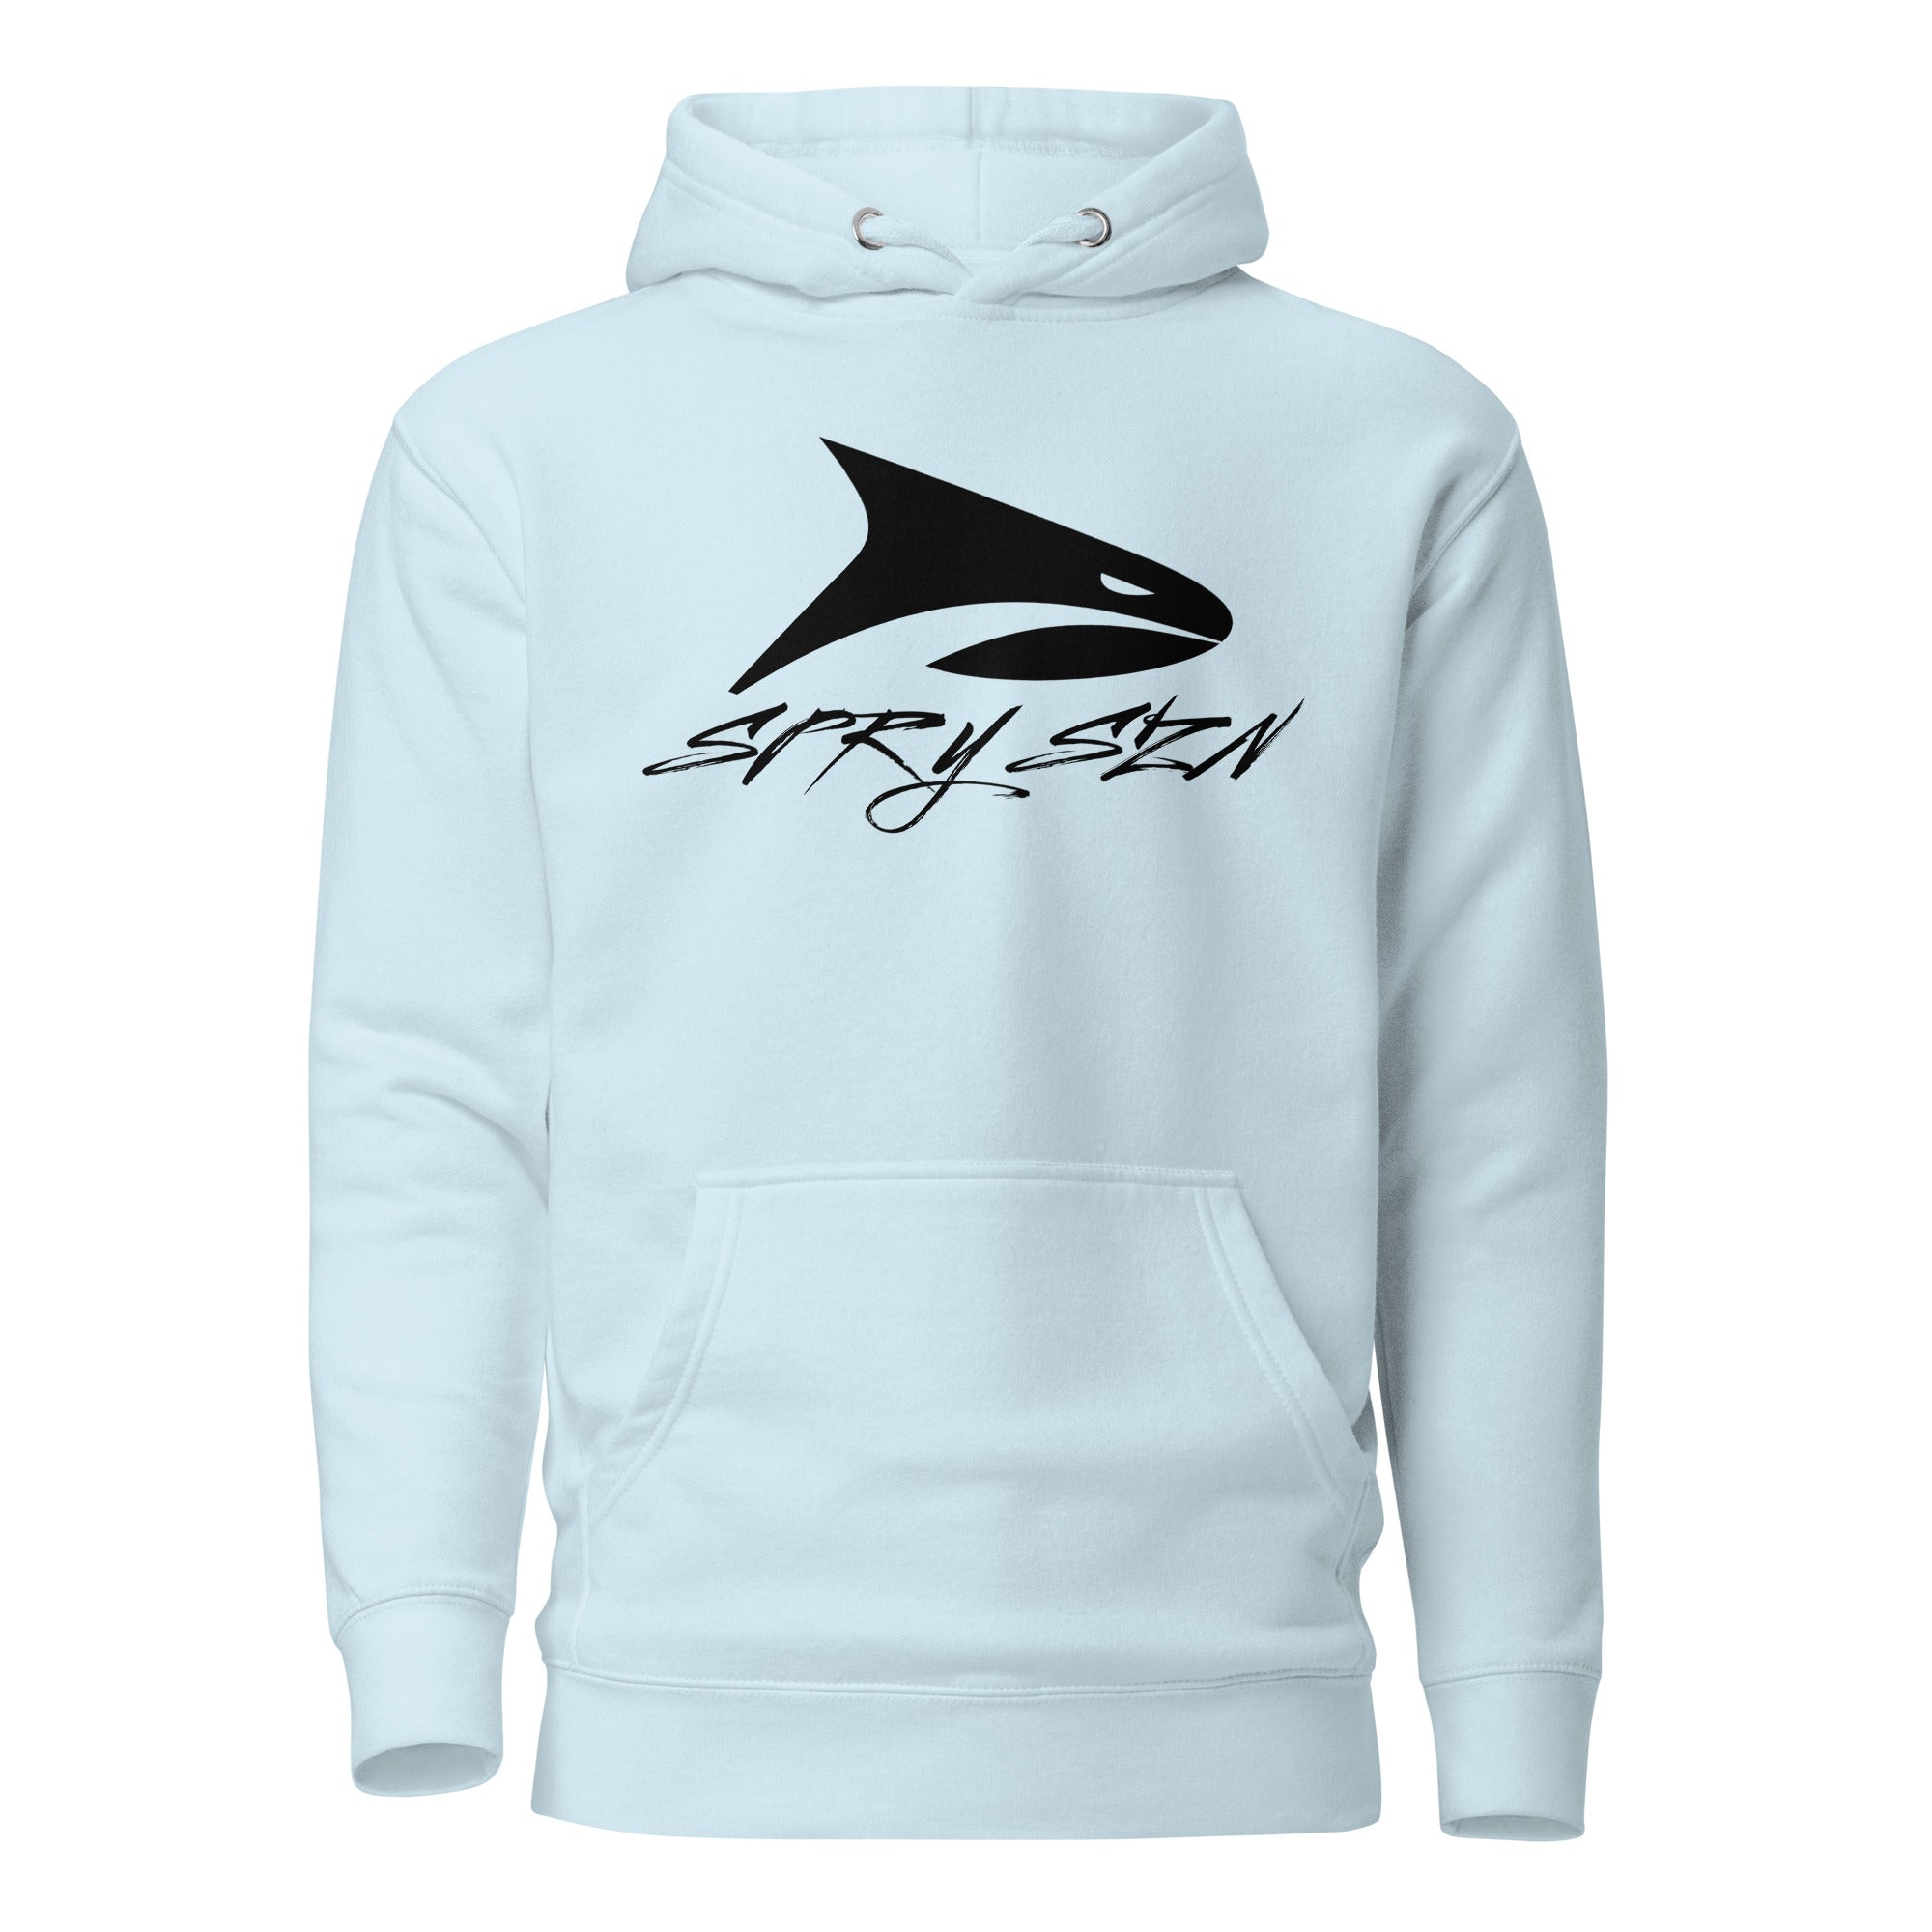 SPRY SZN Black Shark Pullover Hoodie